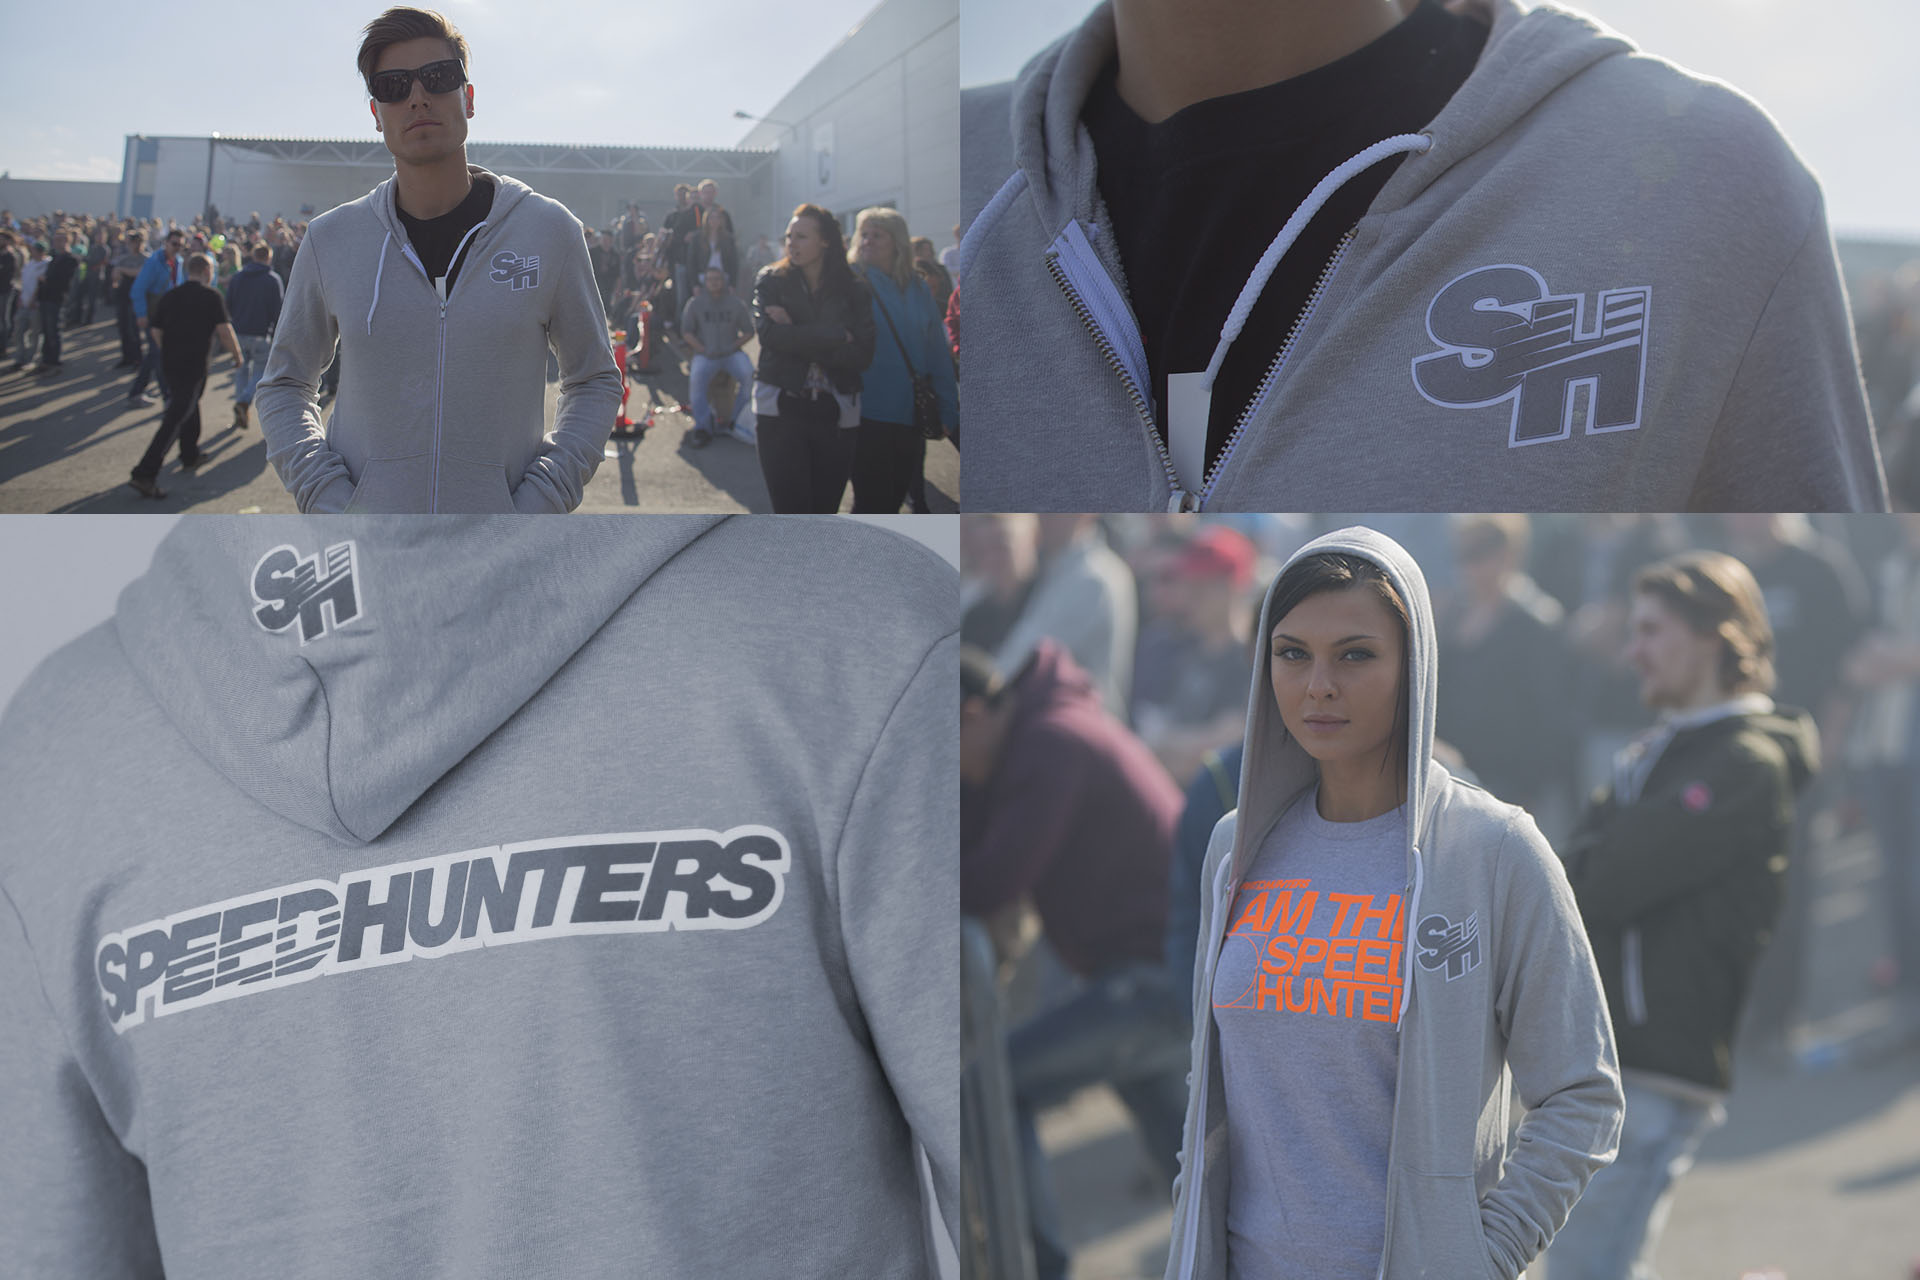 speedhunters sweatshirt